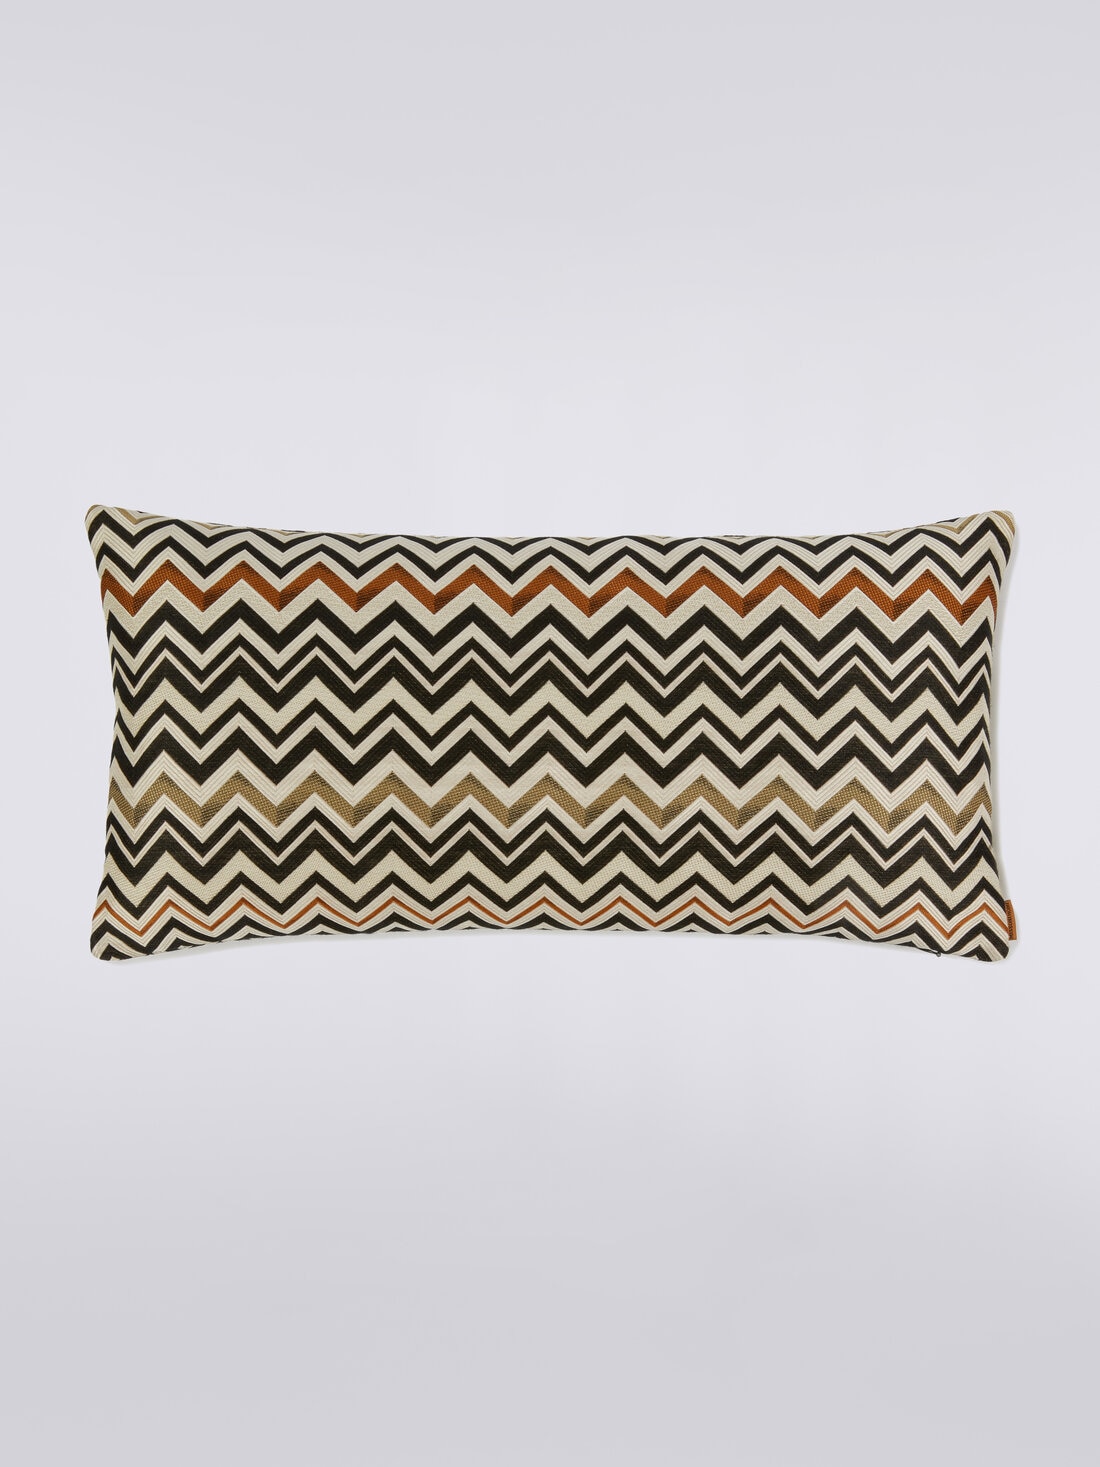 Belfast cushion 30x60 cm, Multicoloured  - 8051275608431 - 0